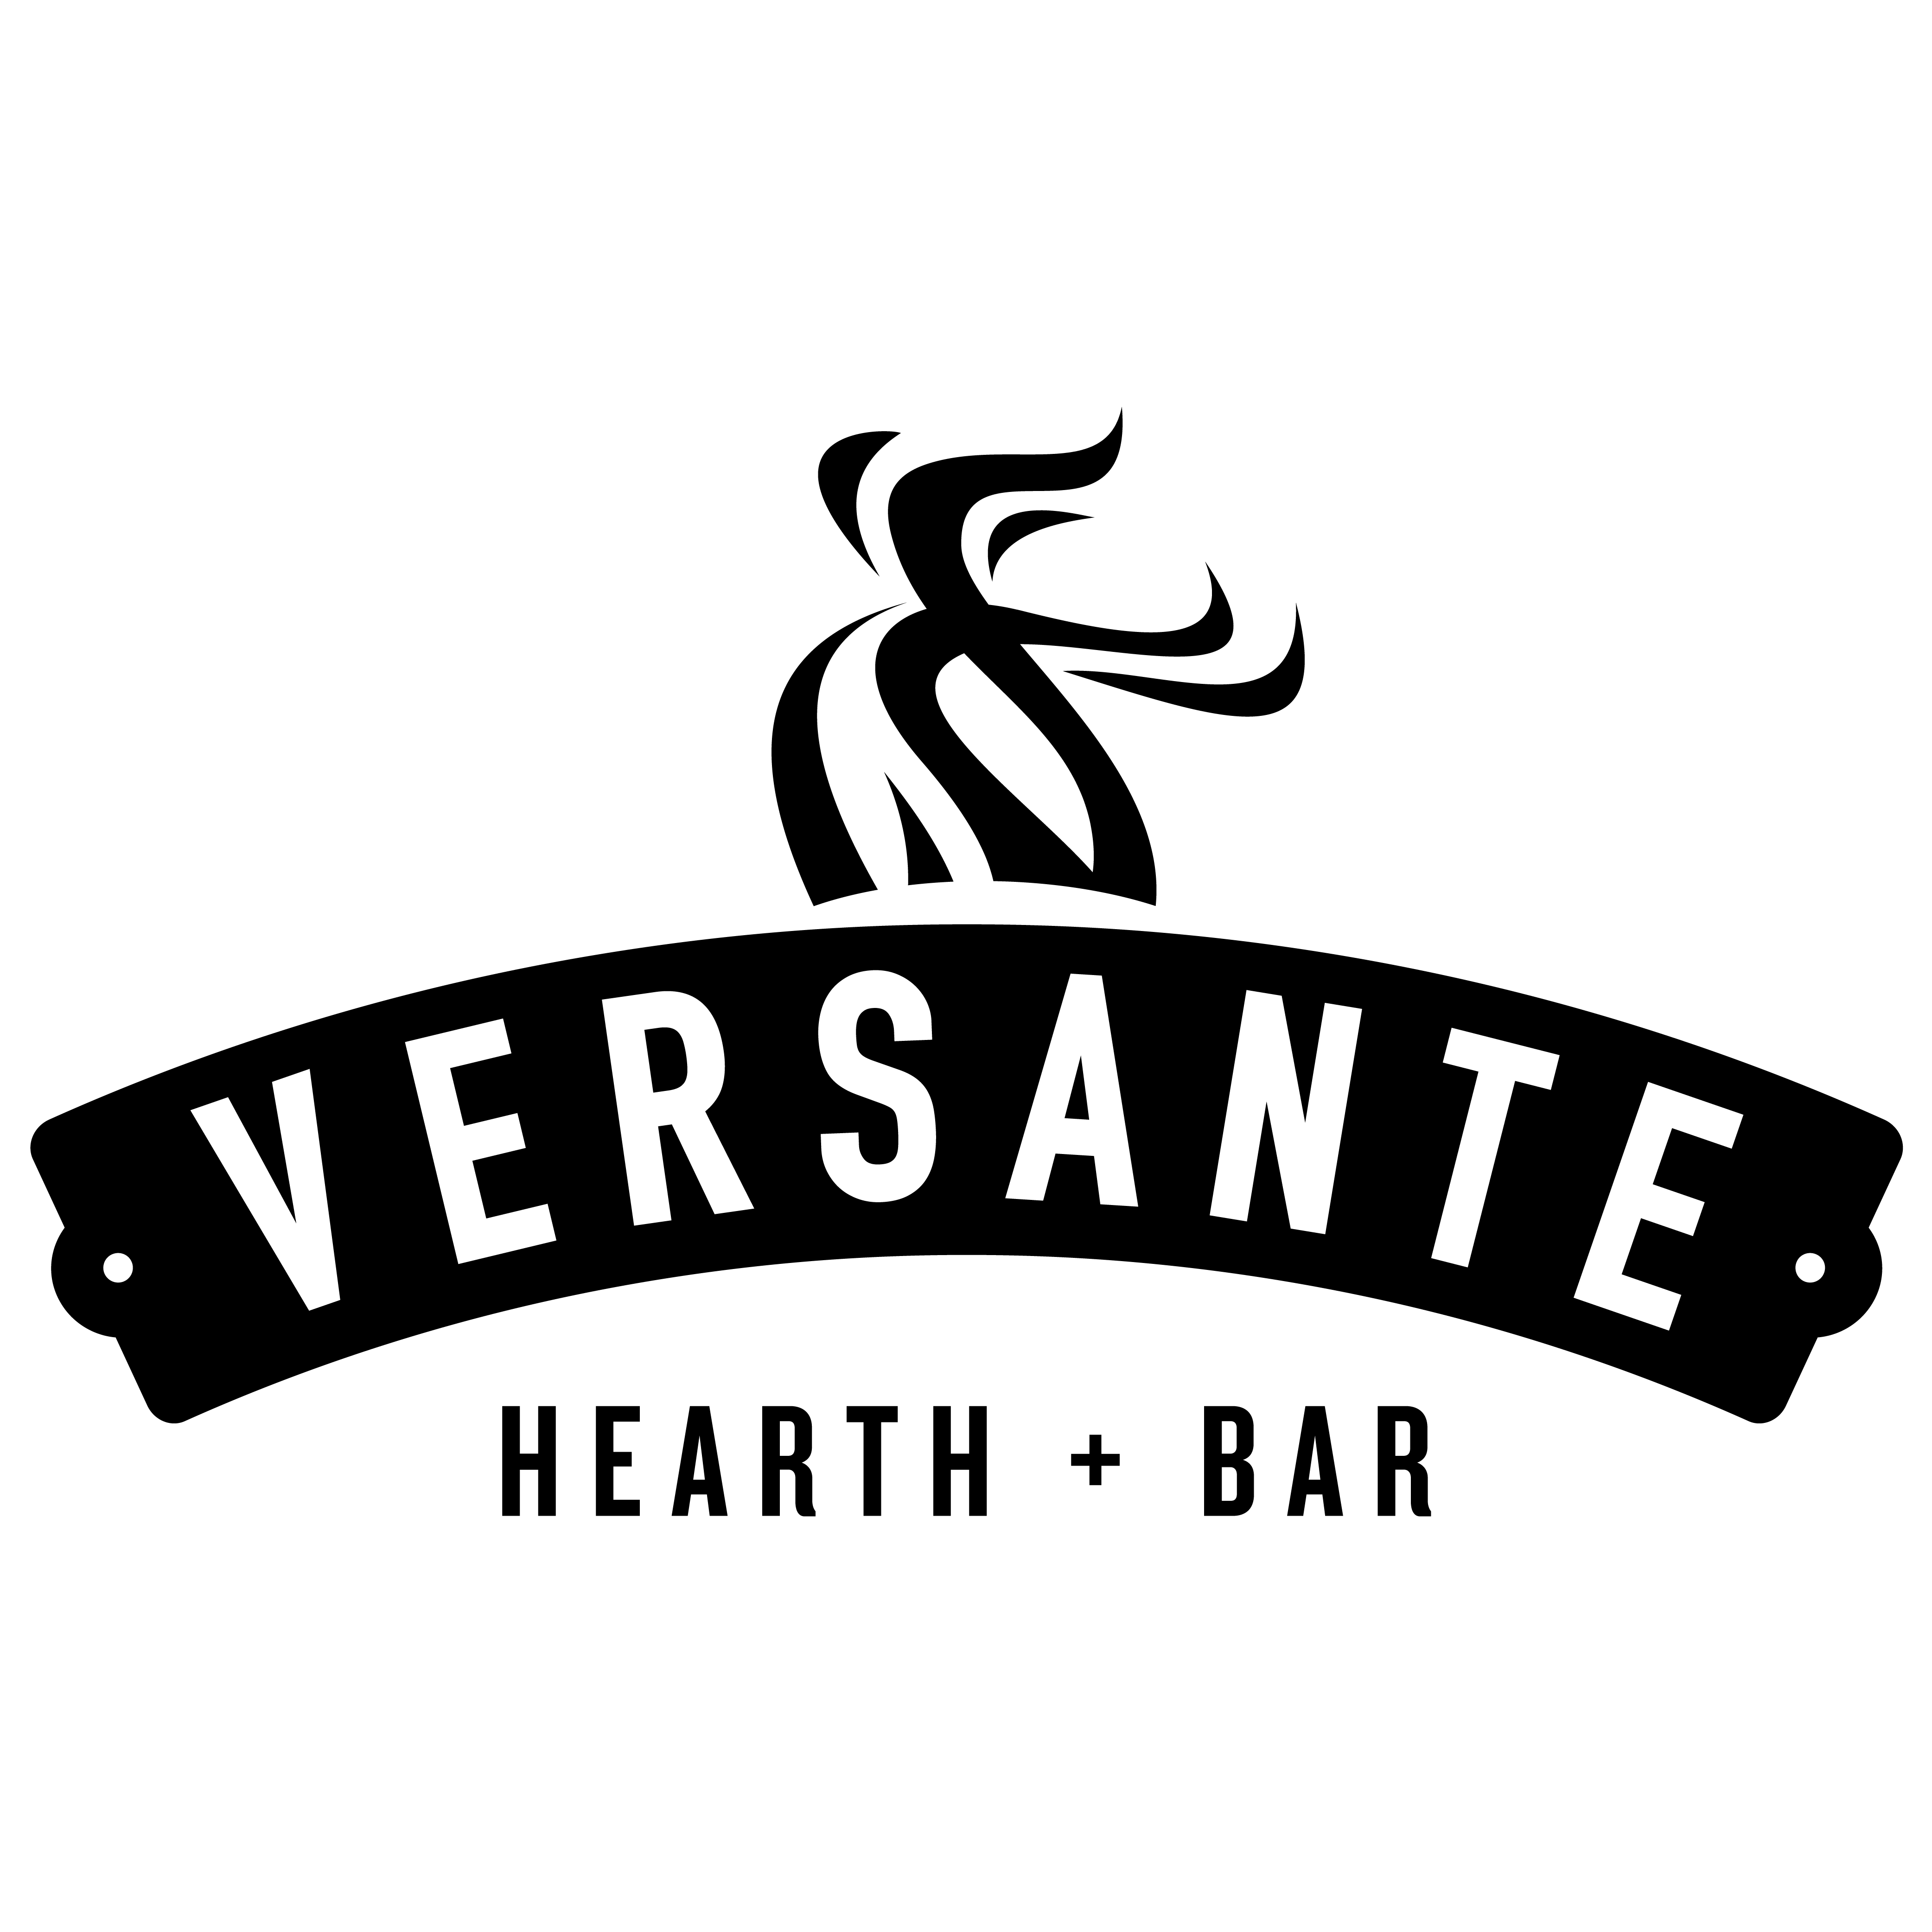 Versante Hearth + Bar